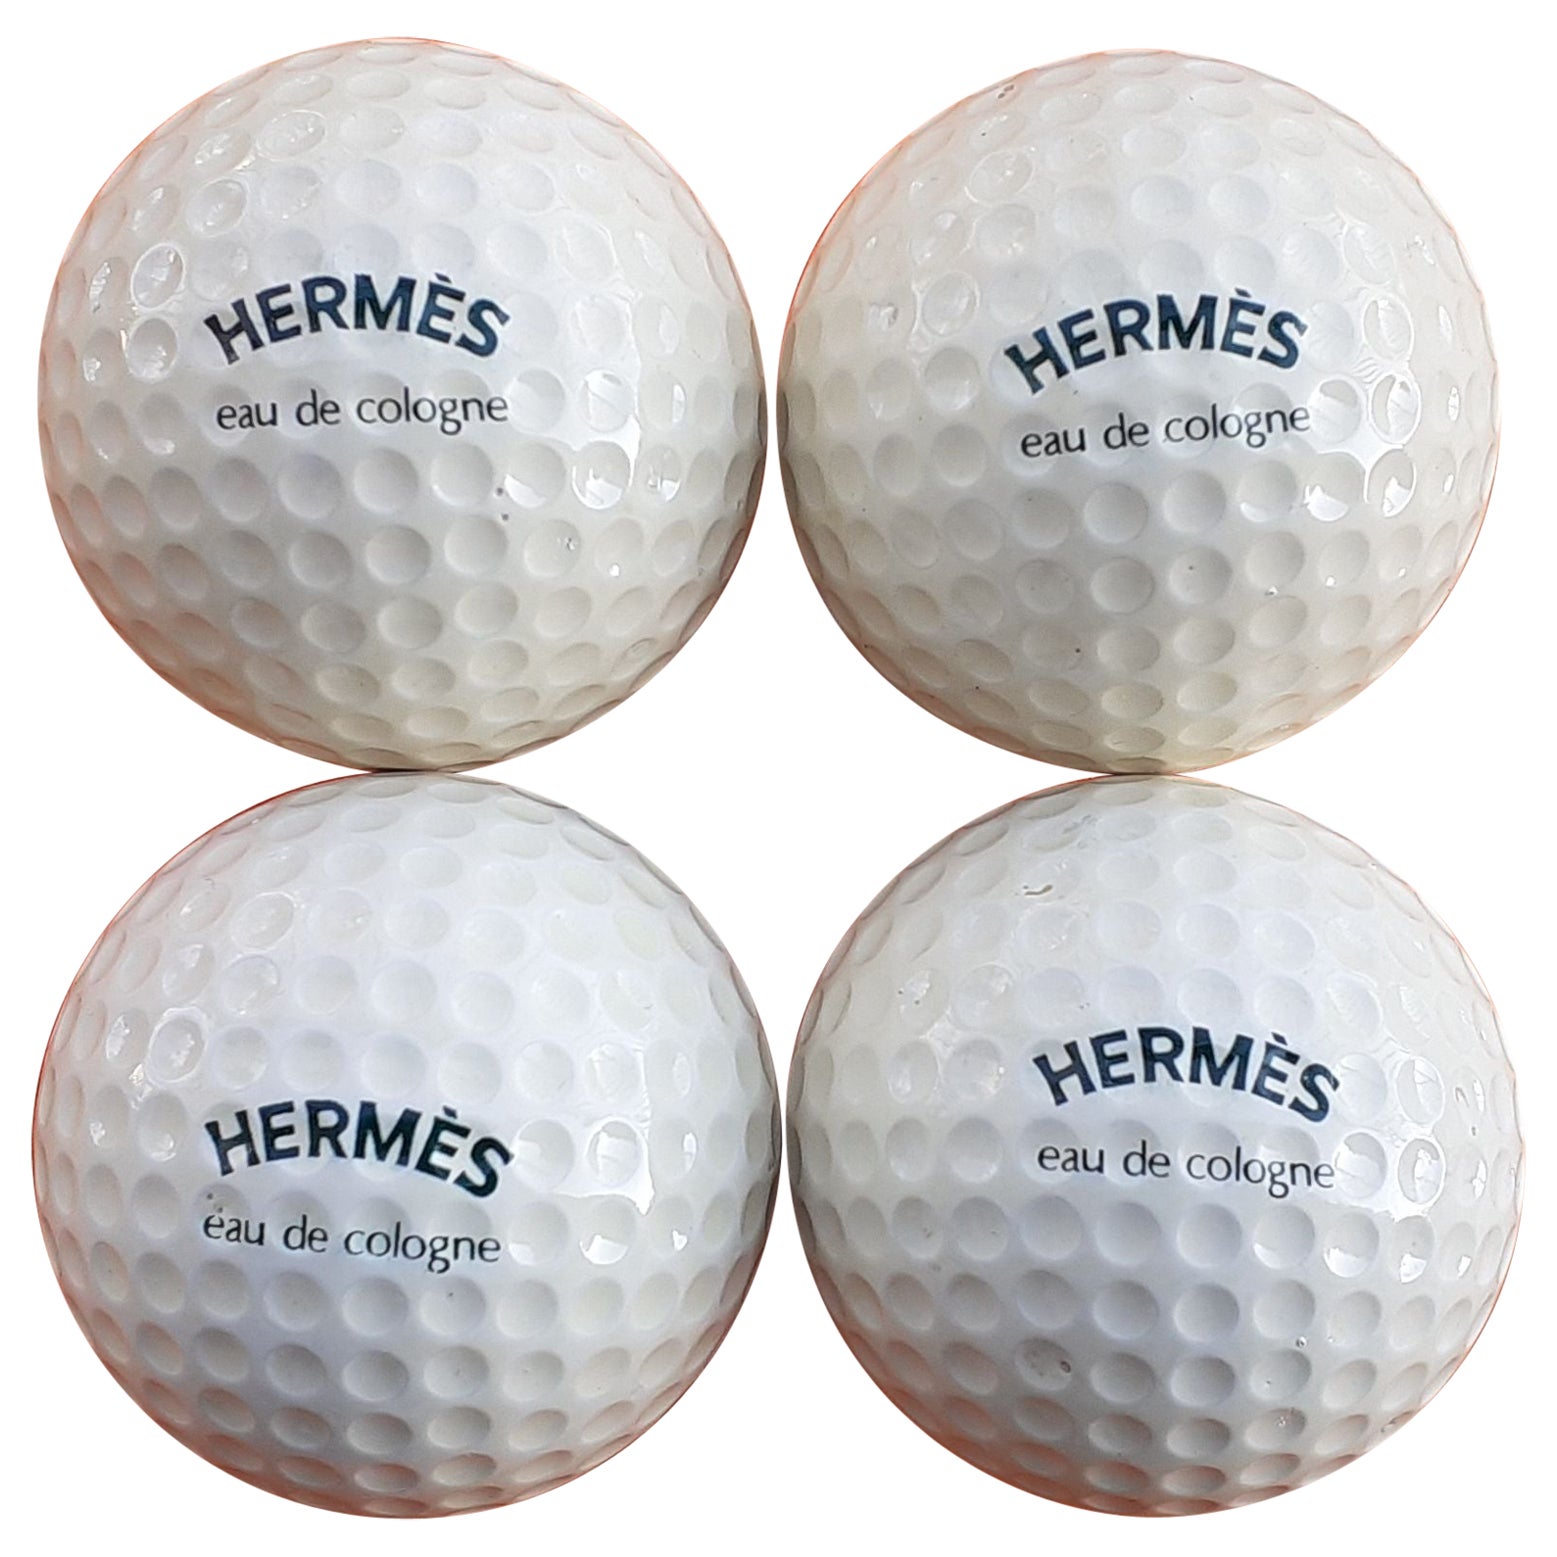 Rare jeu de 4 balles de golf Hermès en vente